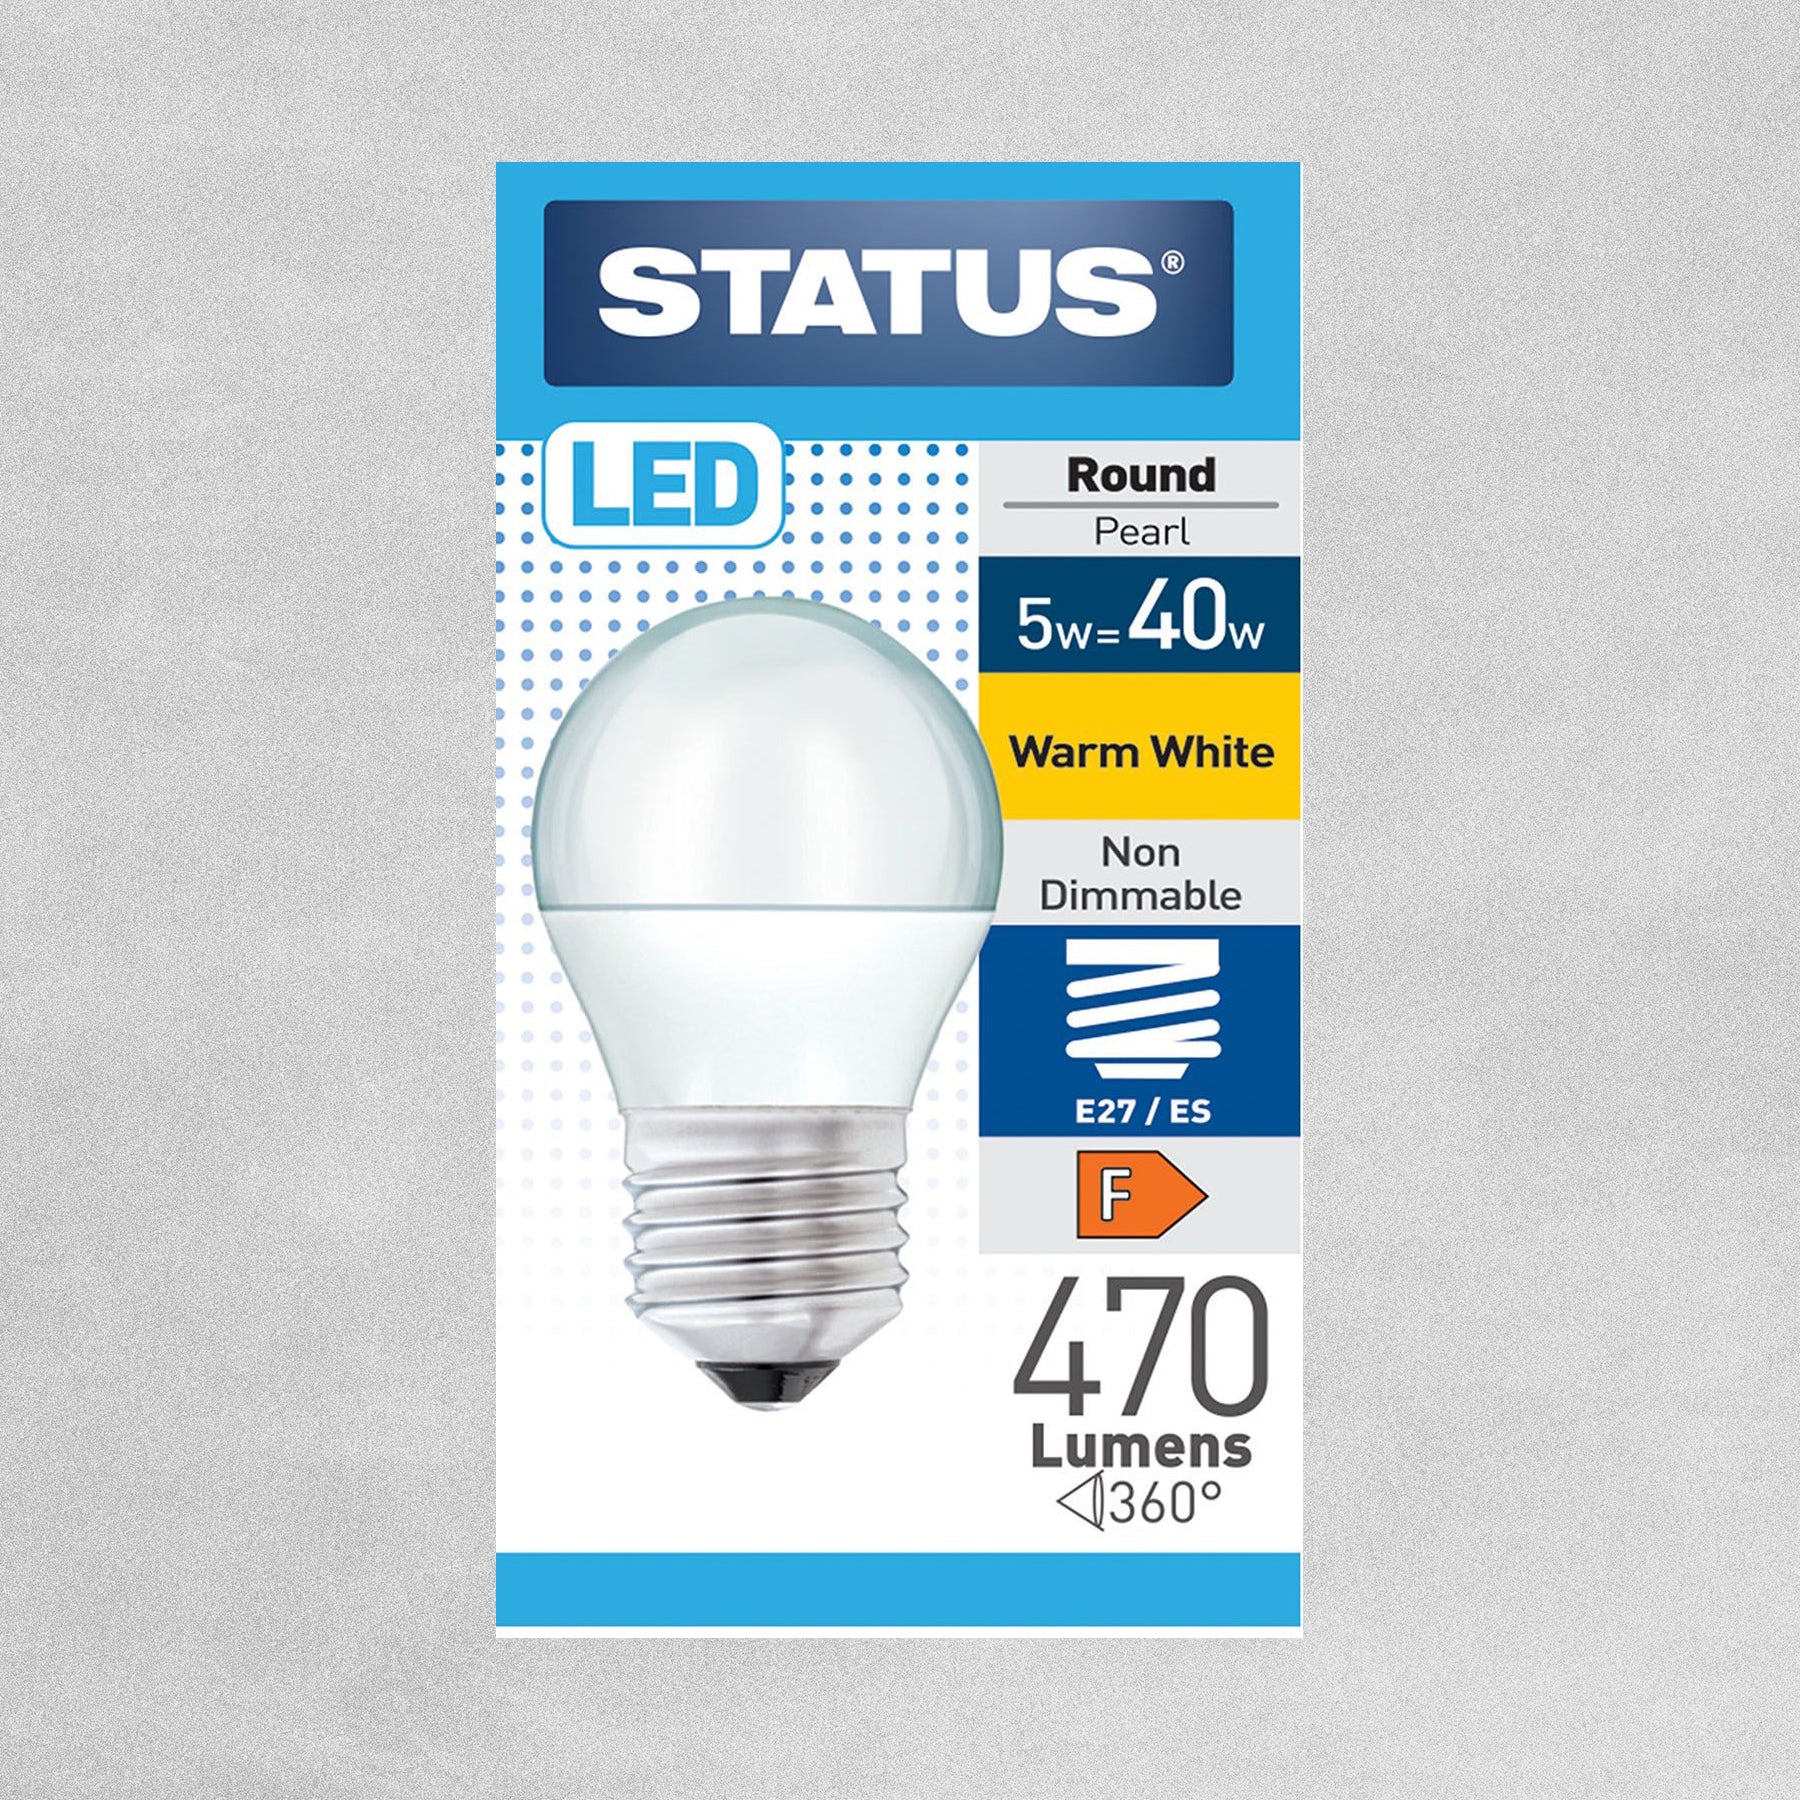 Status LED Round Pearl Bulb E27/ES 5w=40w - Warm White